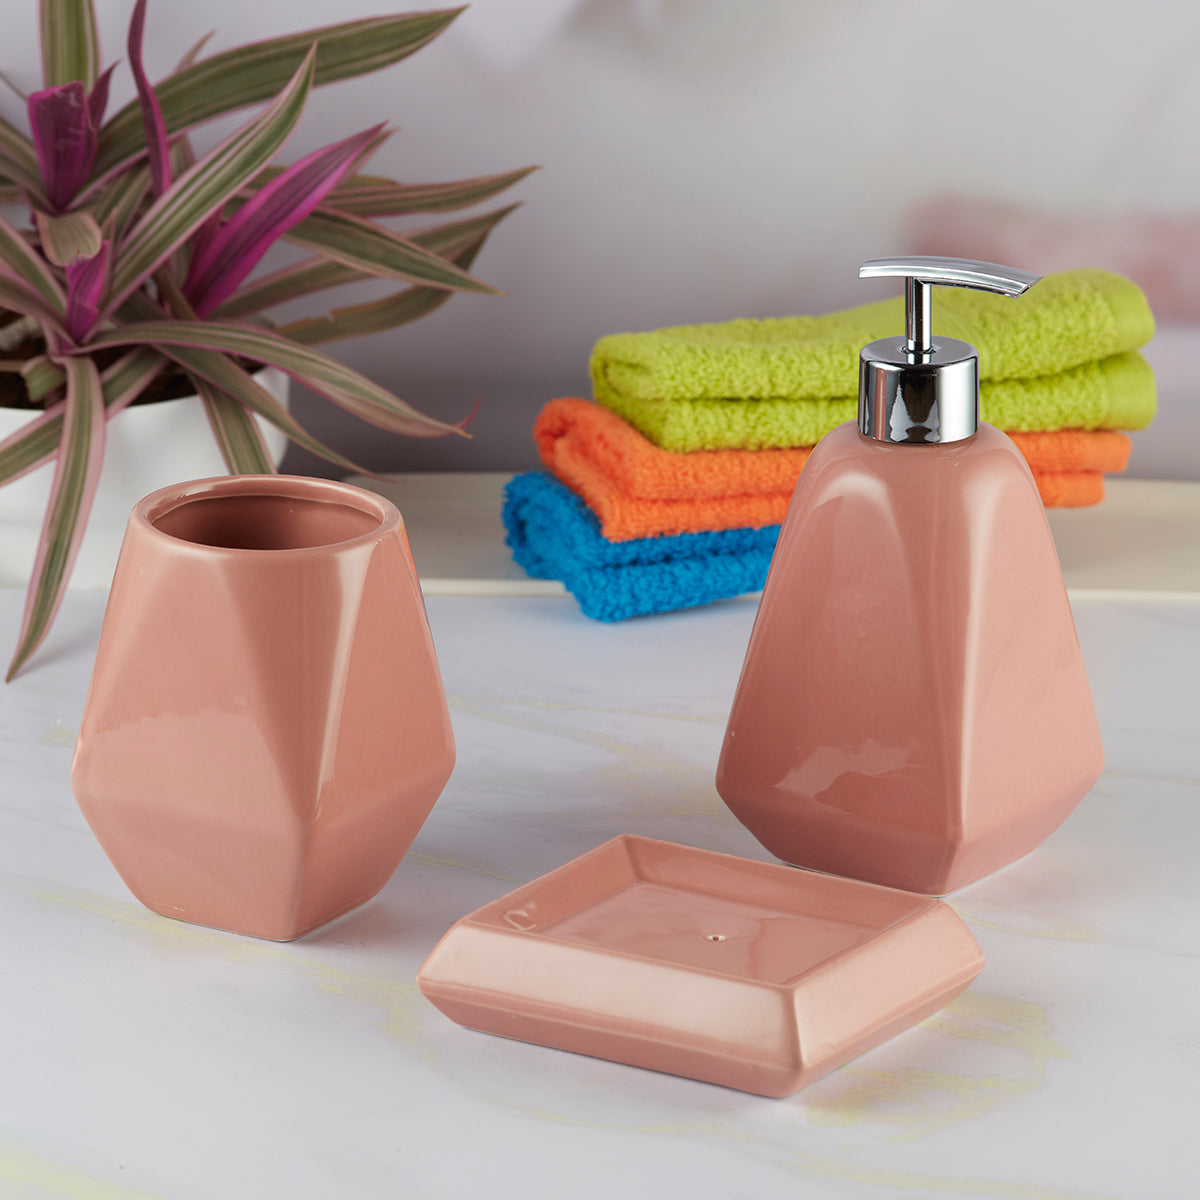 Ceramic Bathroom Accessories Set of 3 Bath Set with Soap Dispenser (8127)